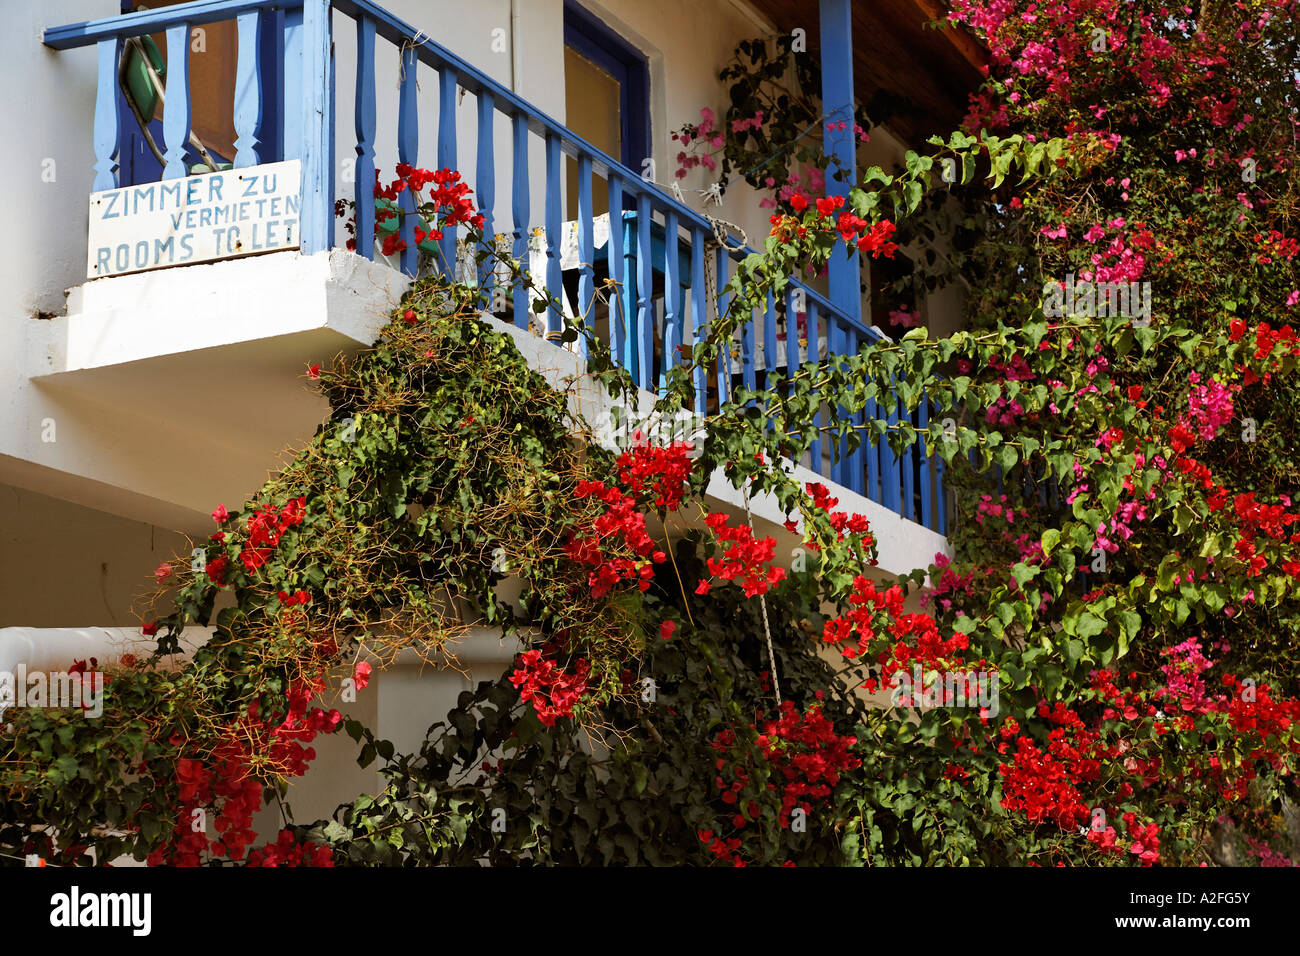 Balcony and bougainvillea, Zimmer zu vermieten Rooms to let, Mochlos, Eastern Crete, Greece Stock Photo